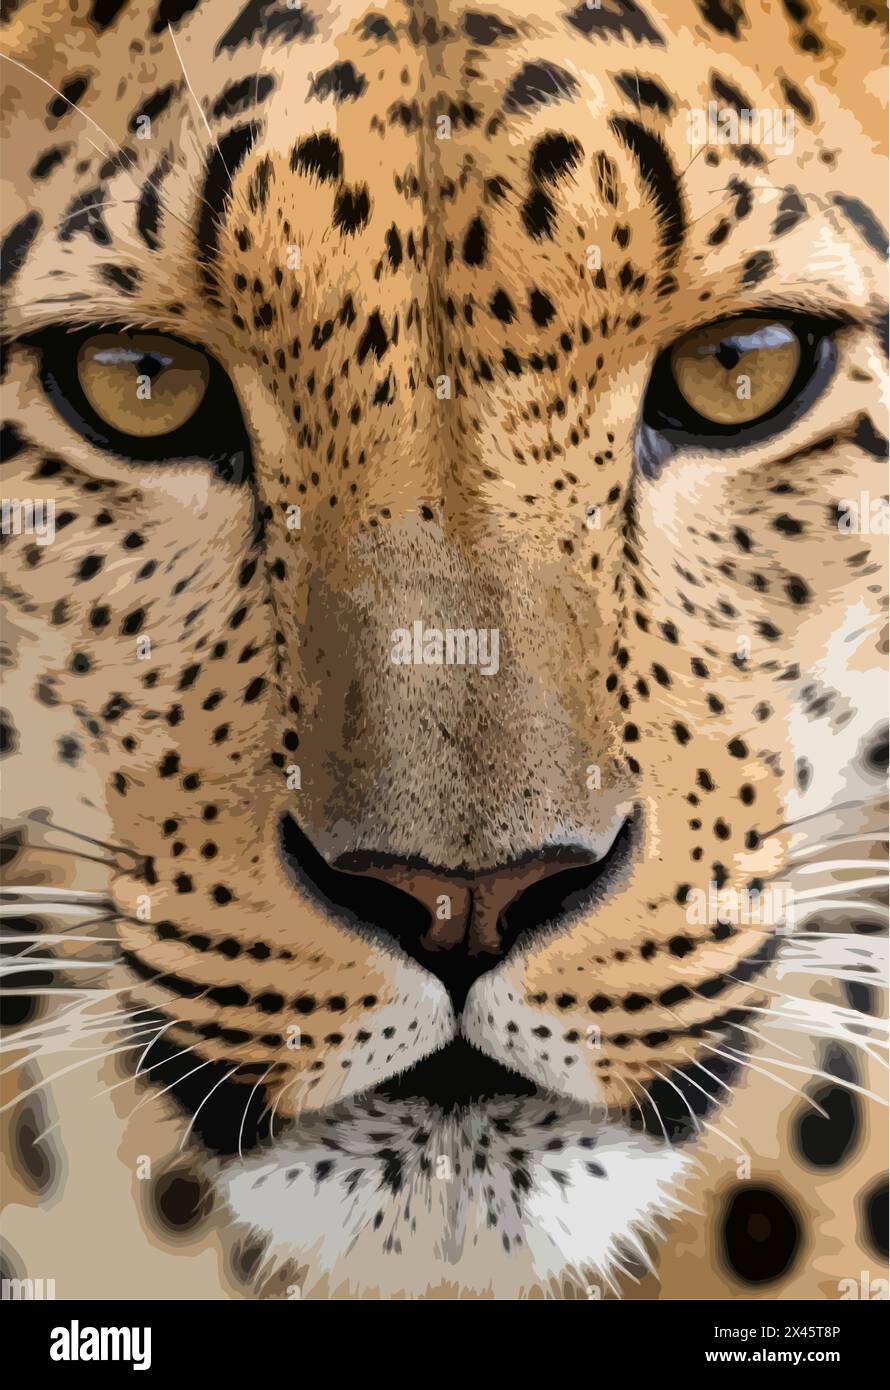 High Detailed Full Color Vektor - fesselnde wilde Karnivore Nahaufnahme Illustration des intensiven stechenden Blicks des Leoparden, der seine Beute betrachtet Stock Vektor